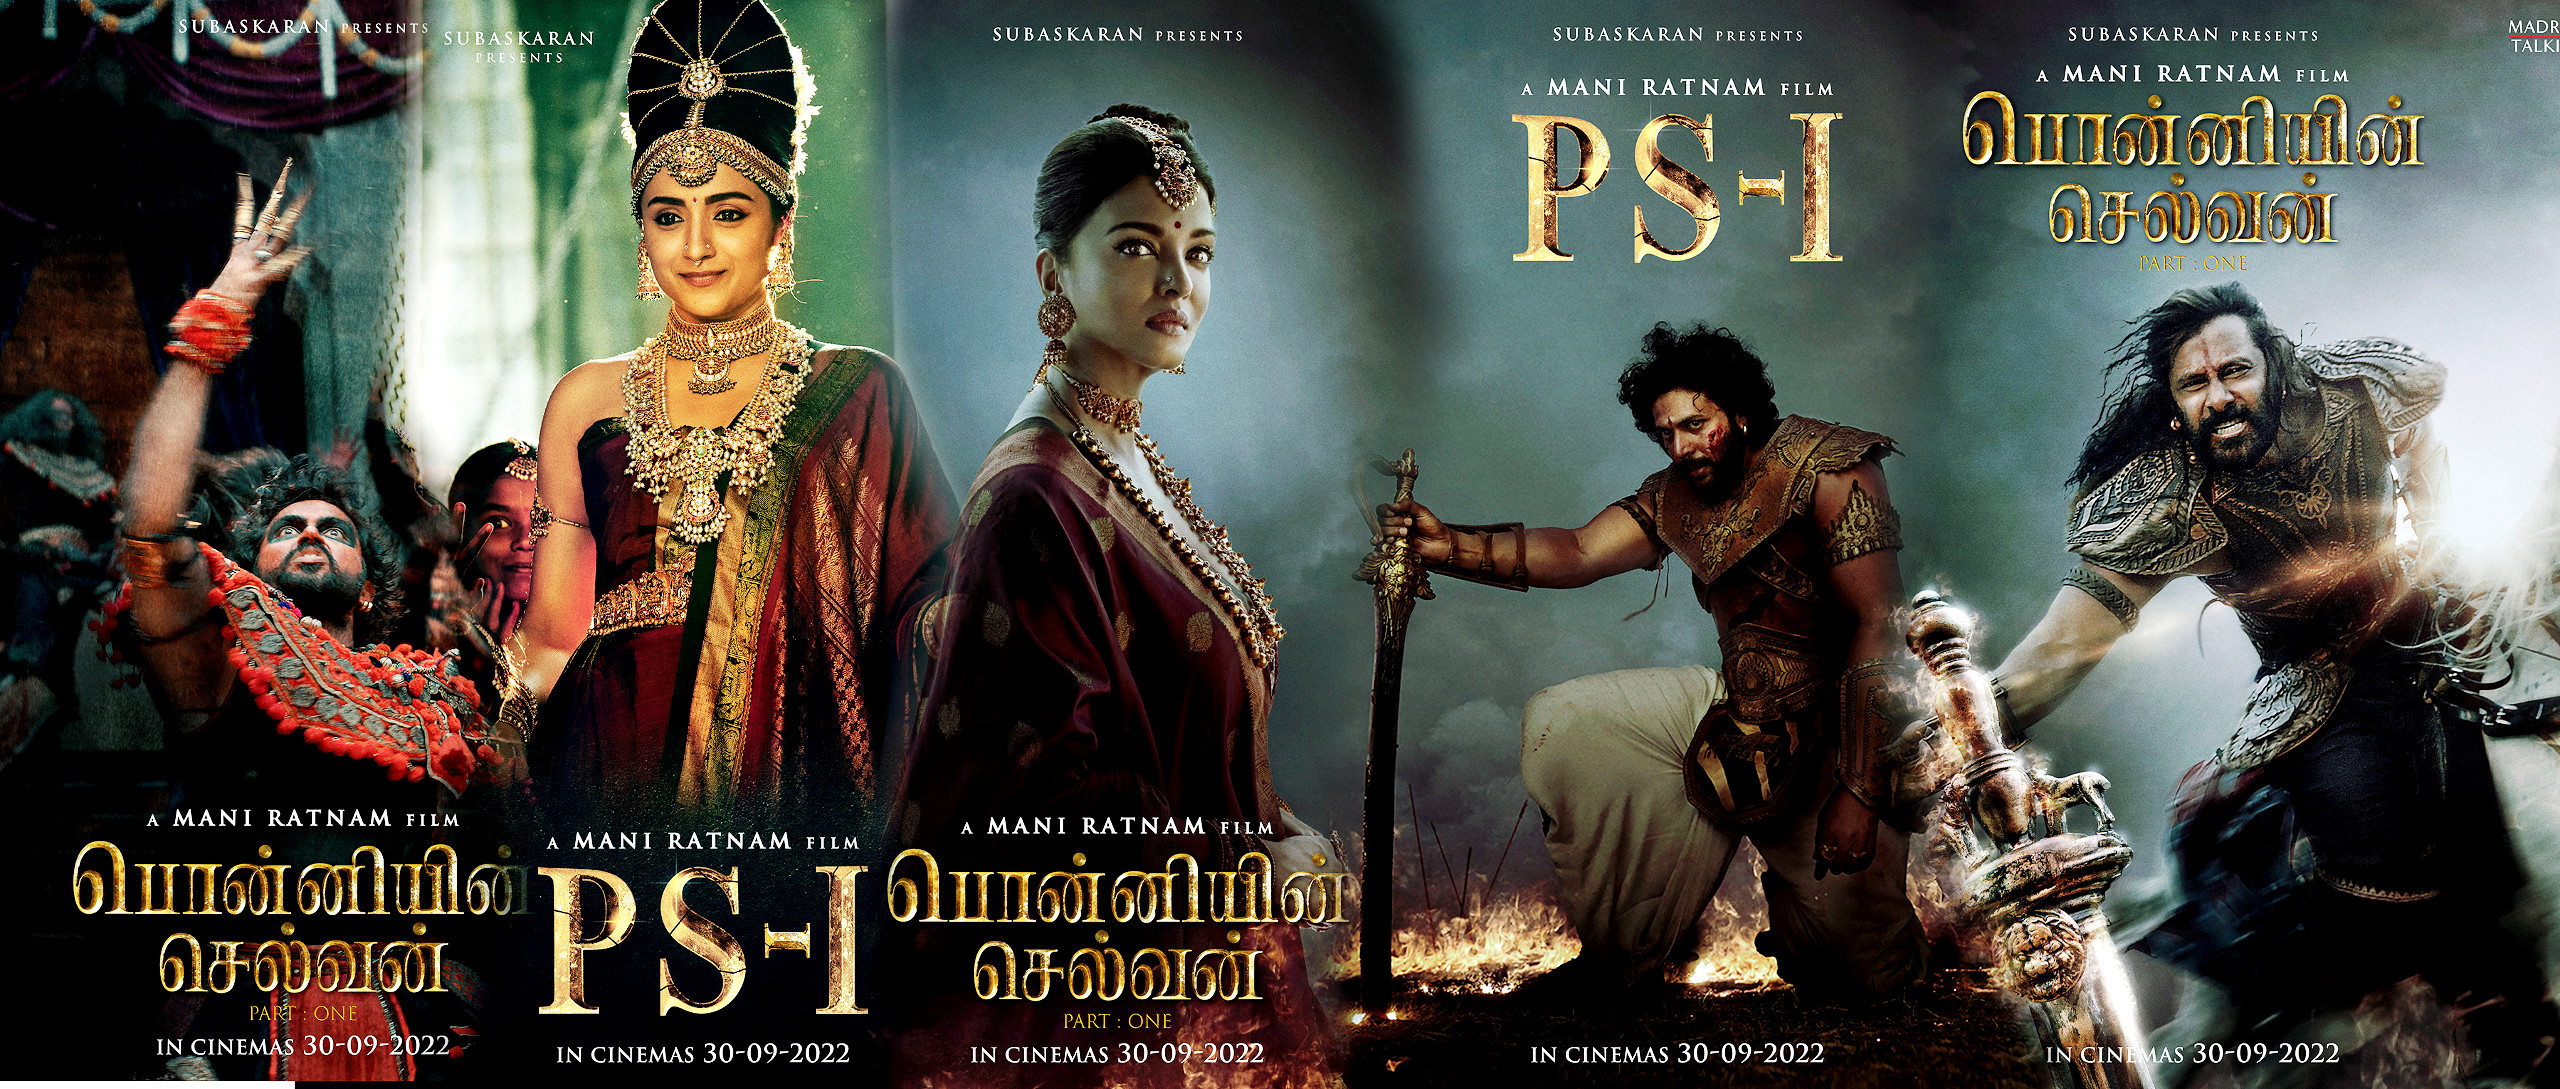 ps1 tamil movie reviews